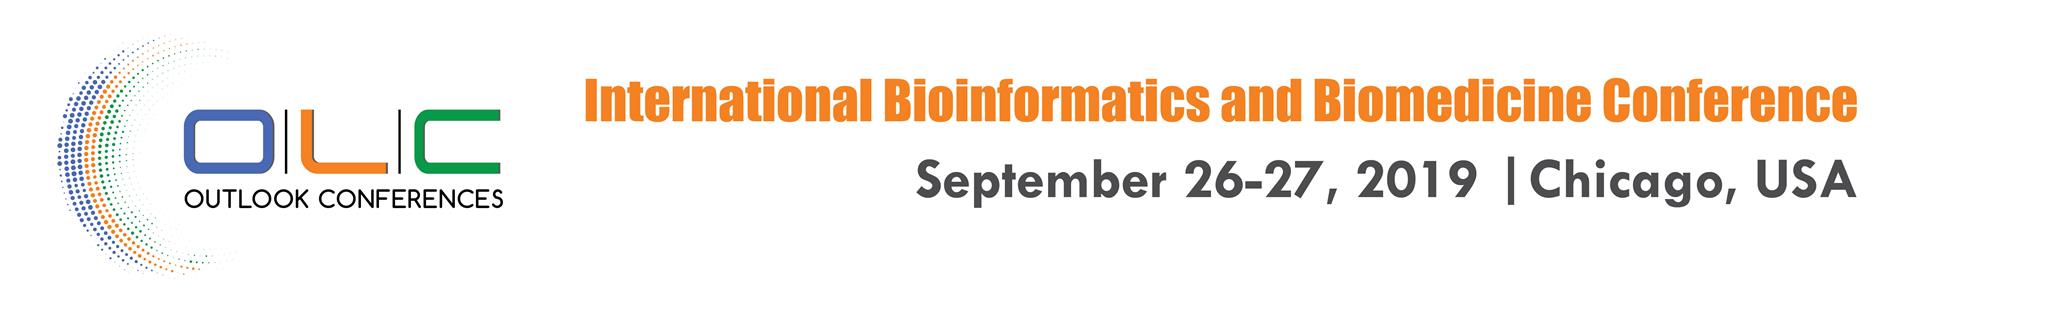 International Bioinformatics and Biomedicine Conference, Chicago, Illinois, United States